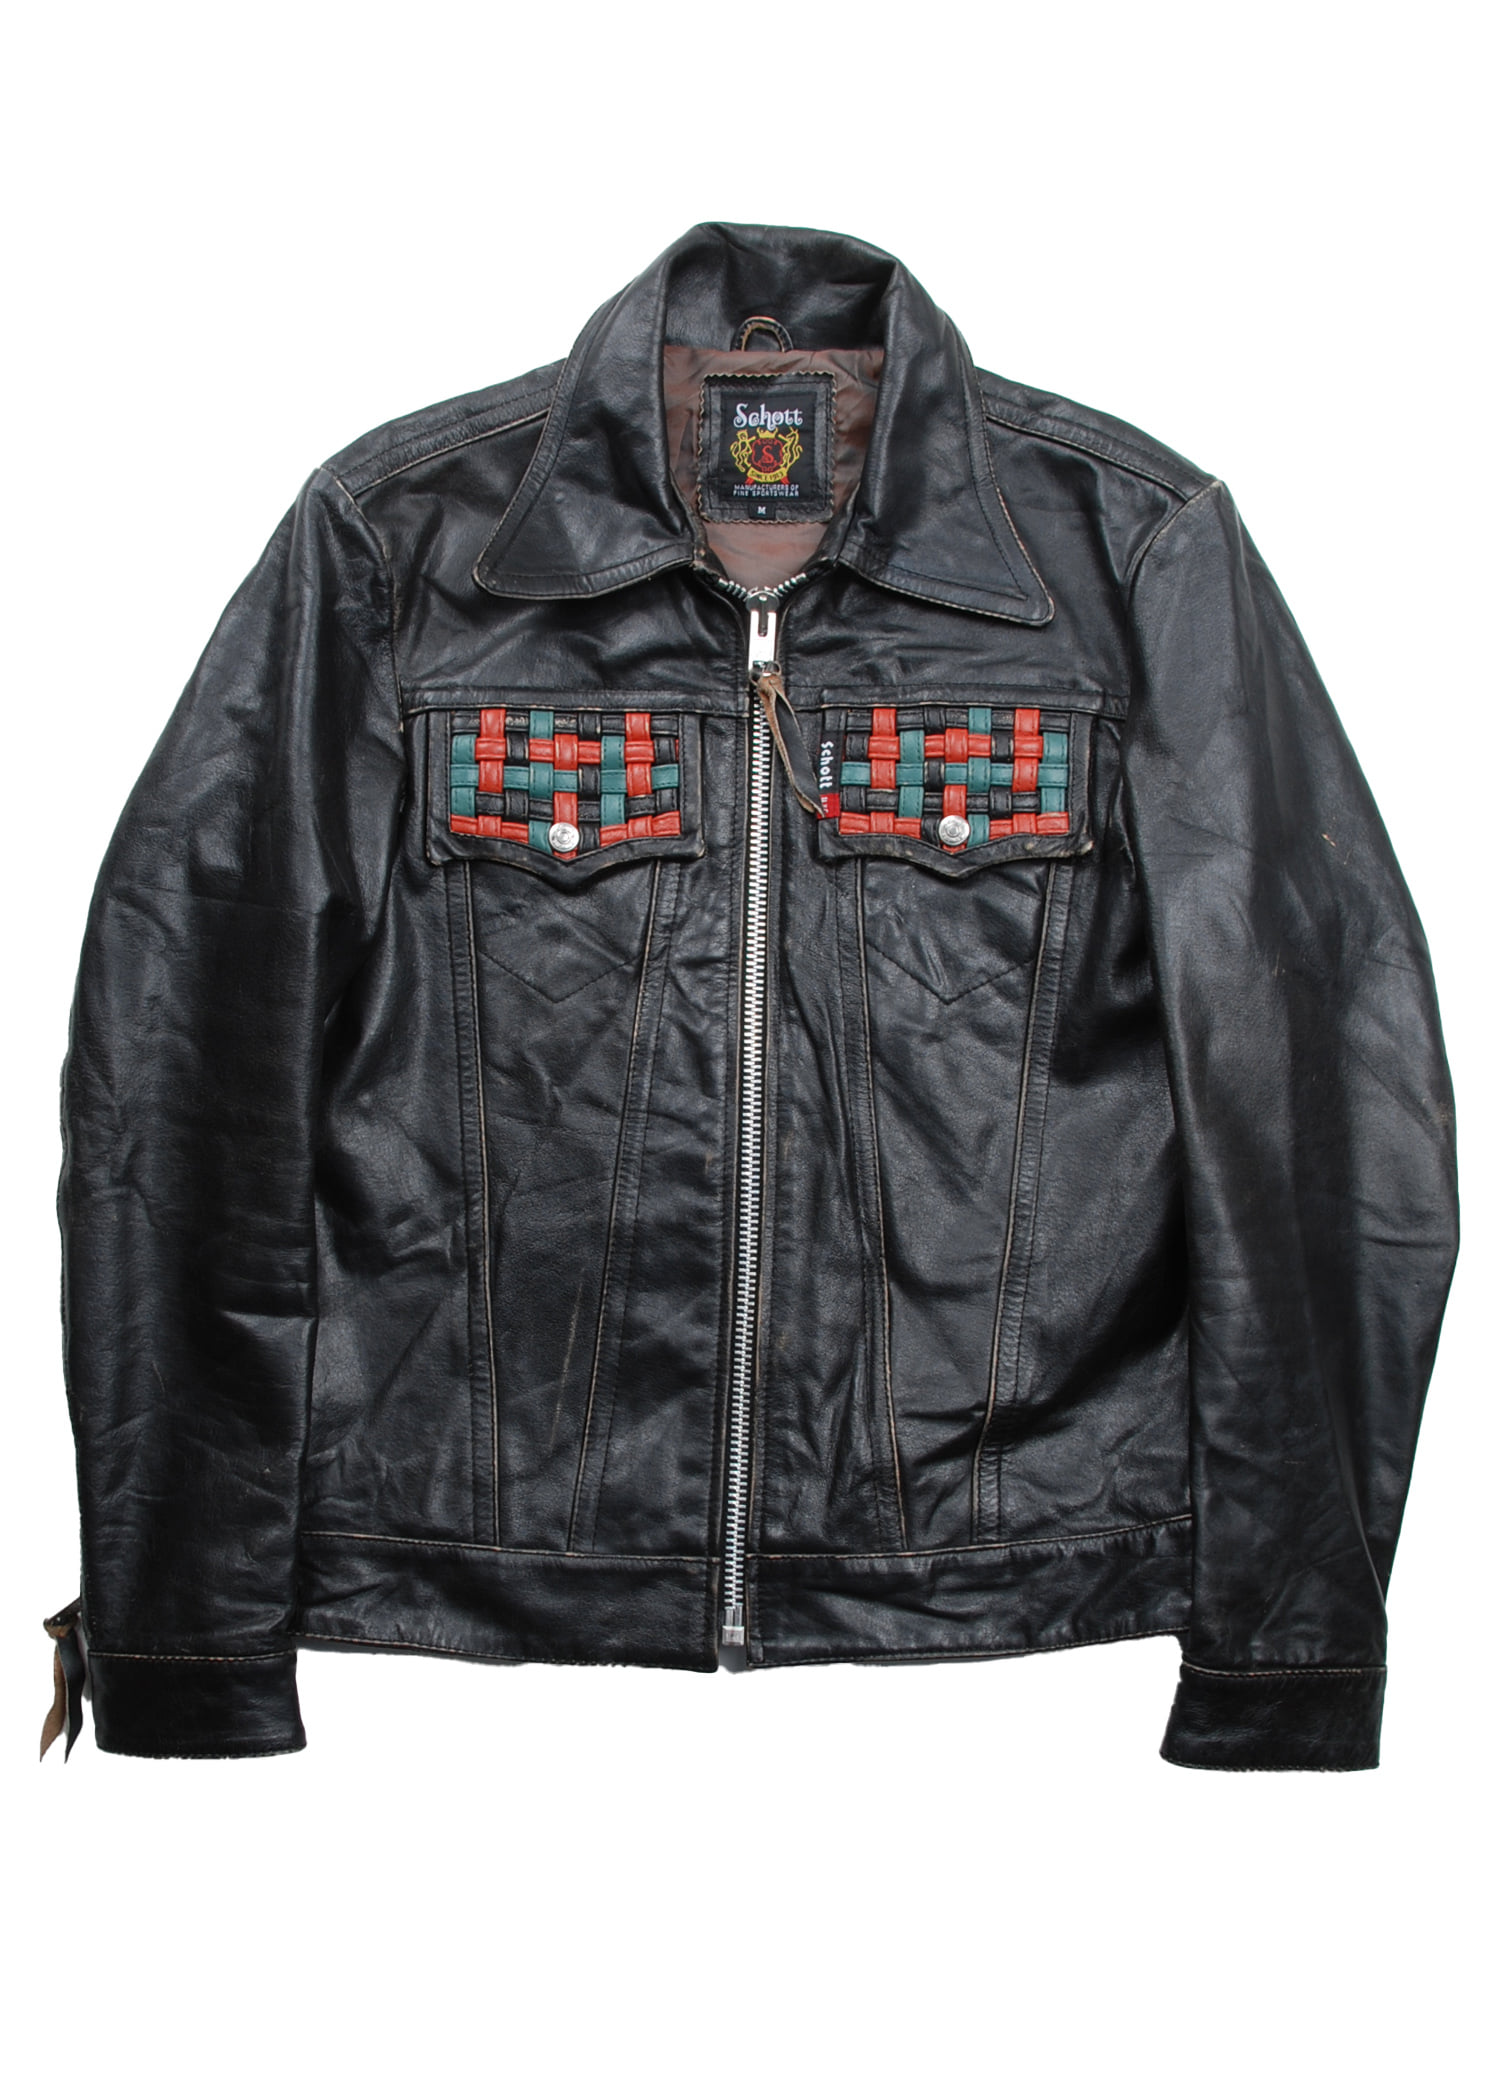 Schott westerm leather jacket